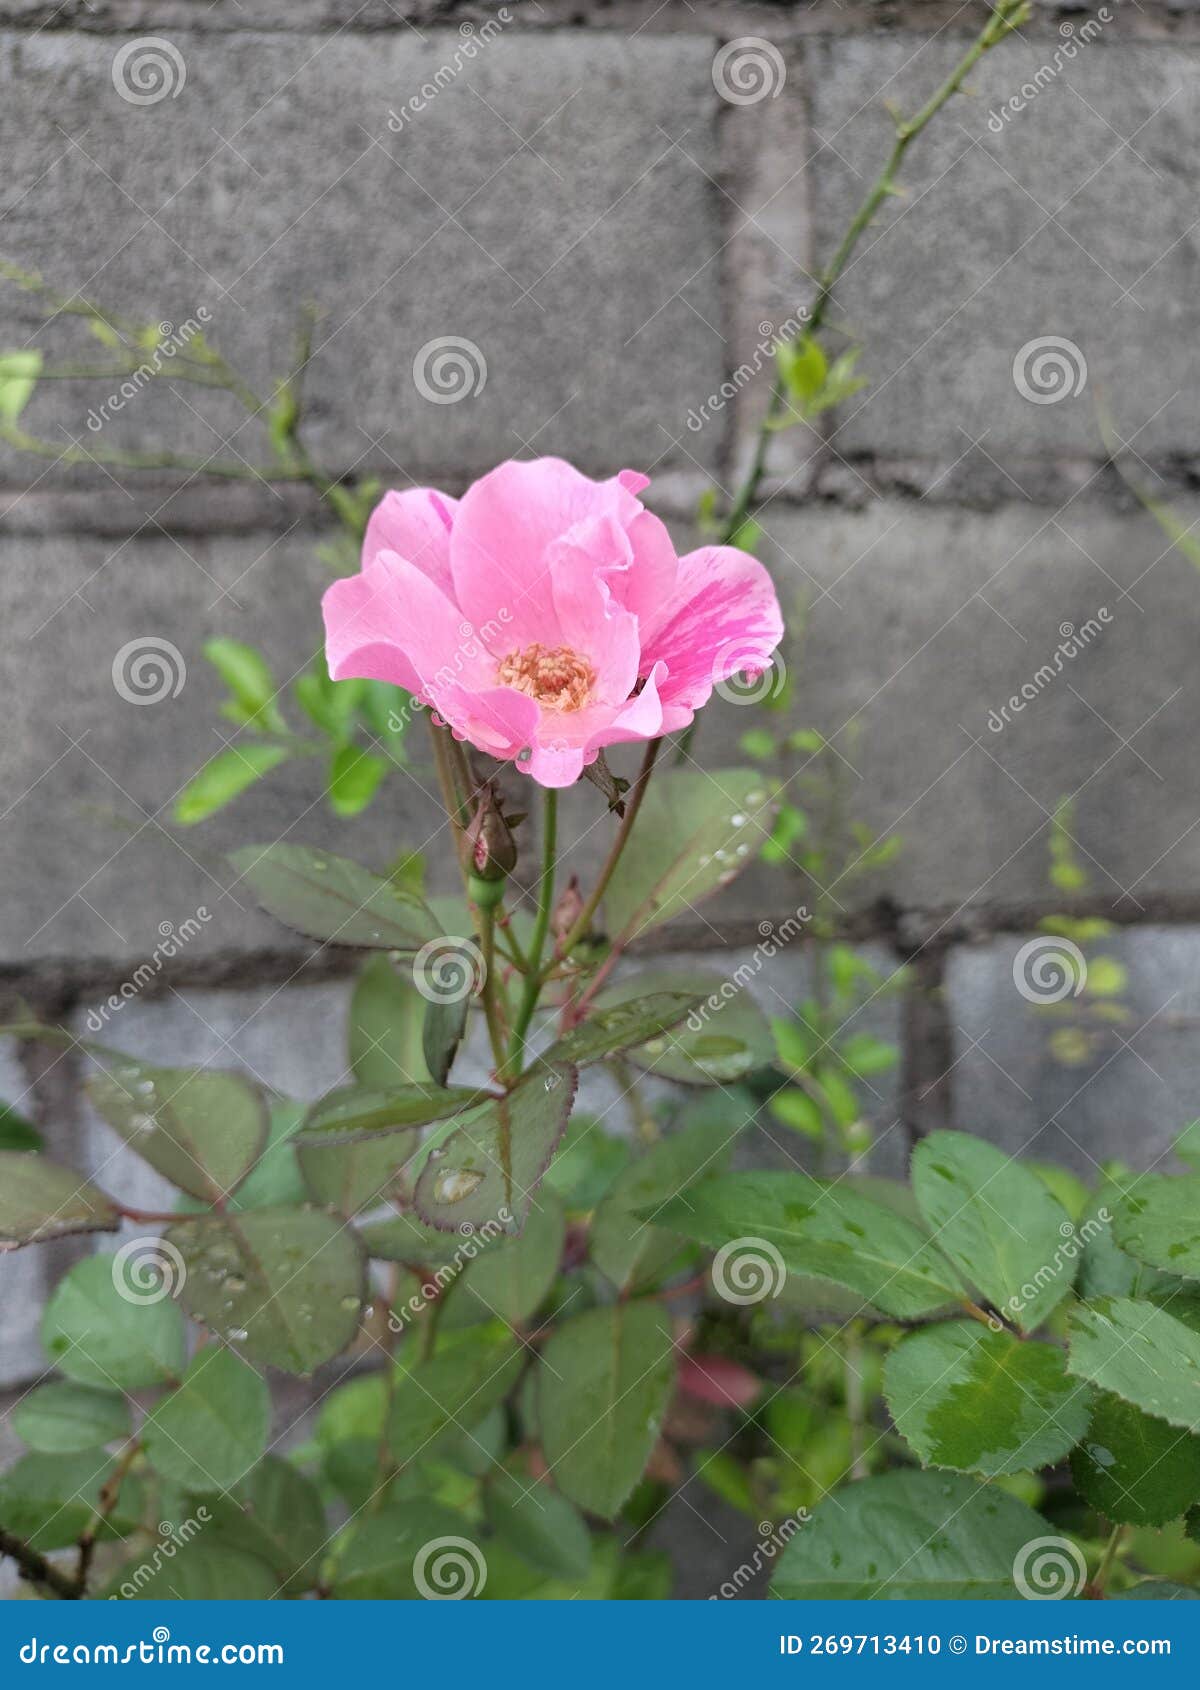 blurred pink rose and dew spash.